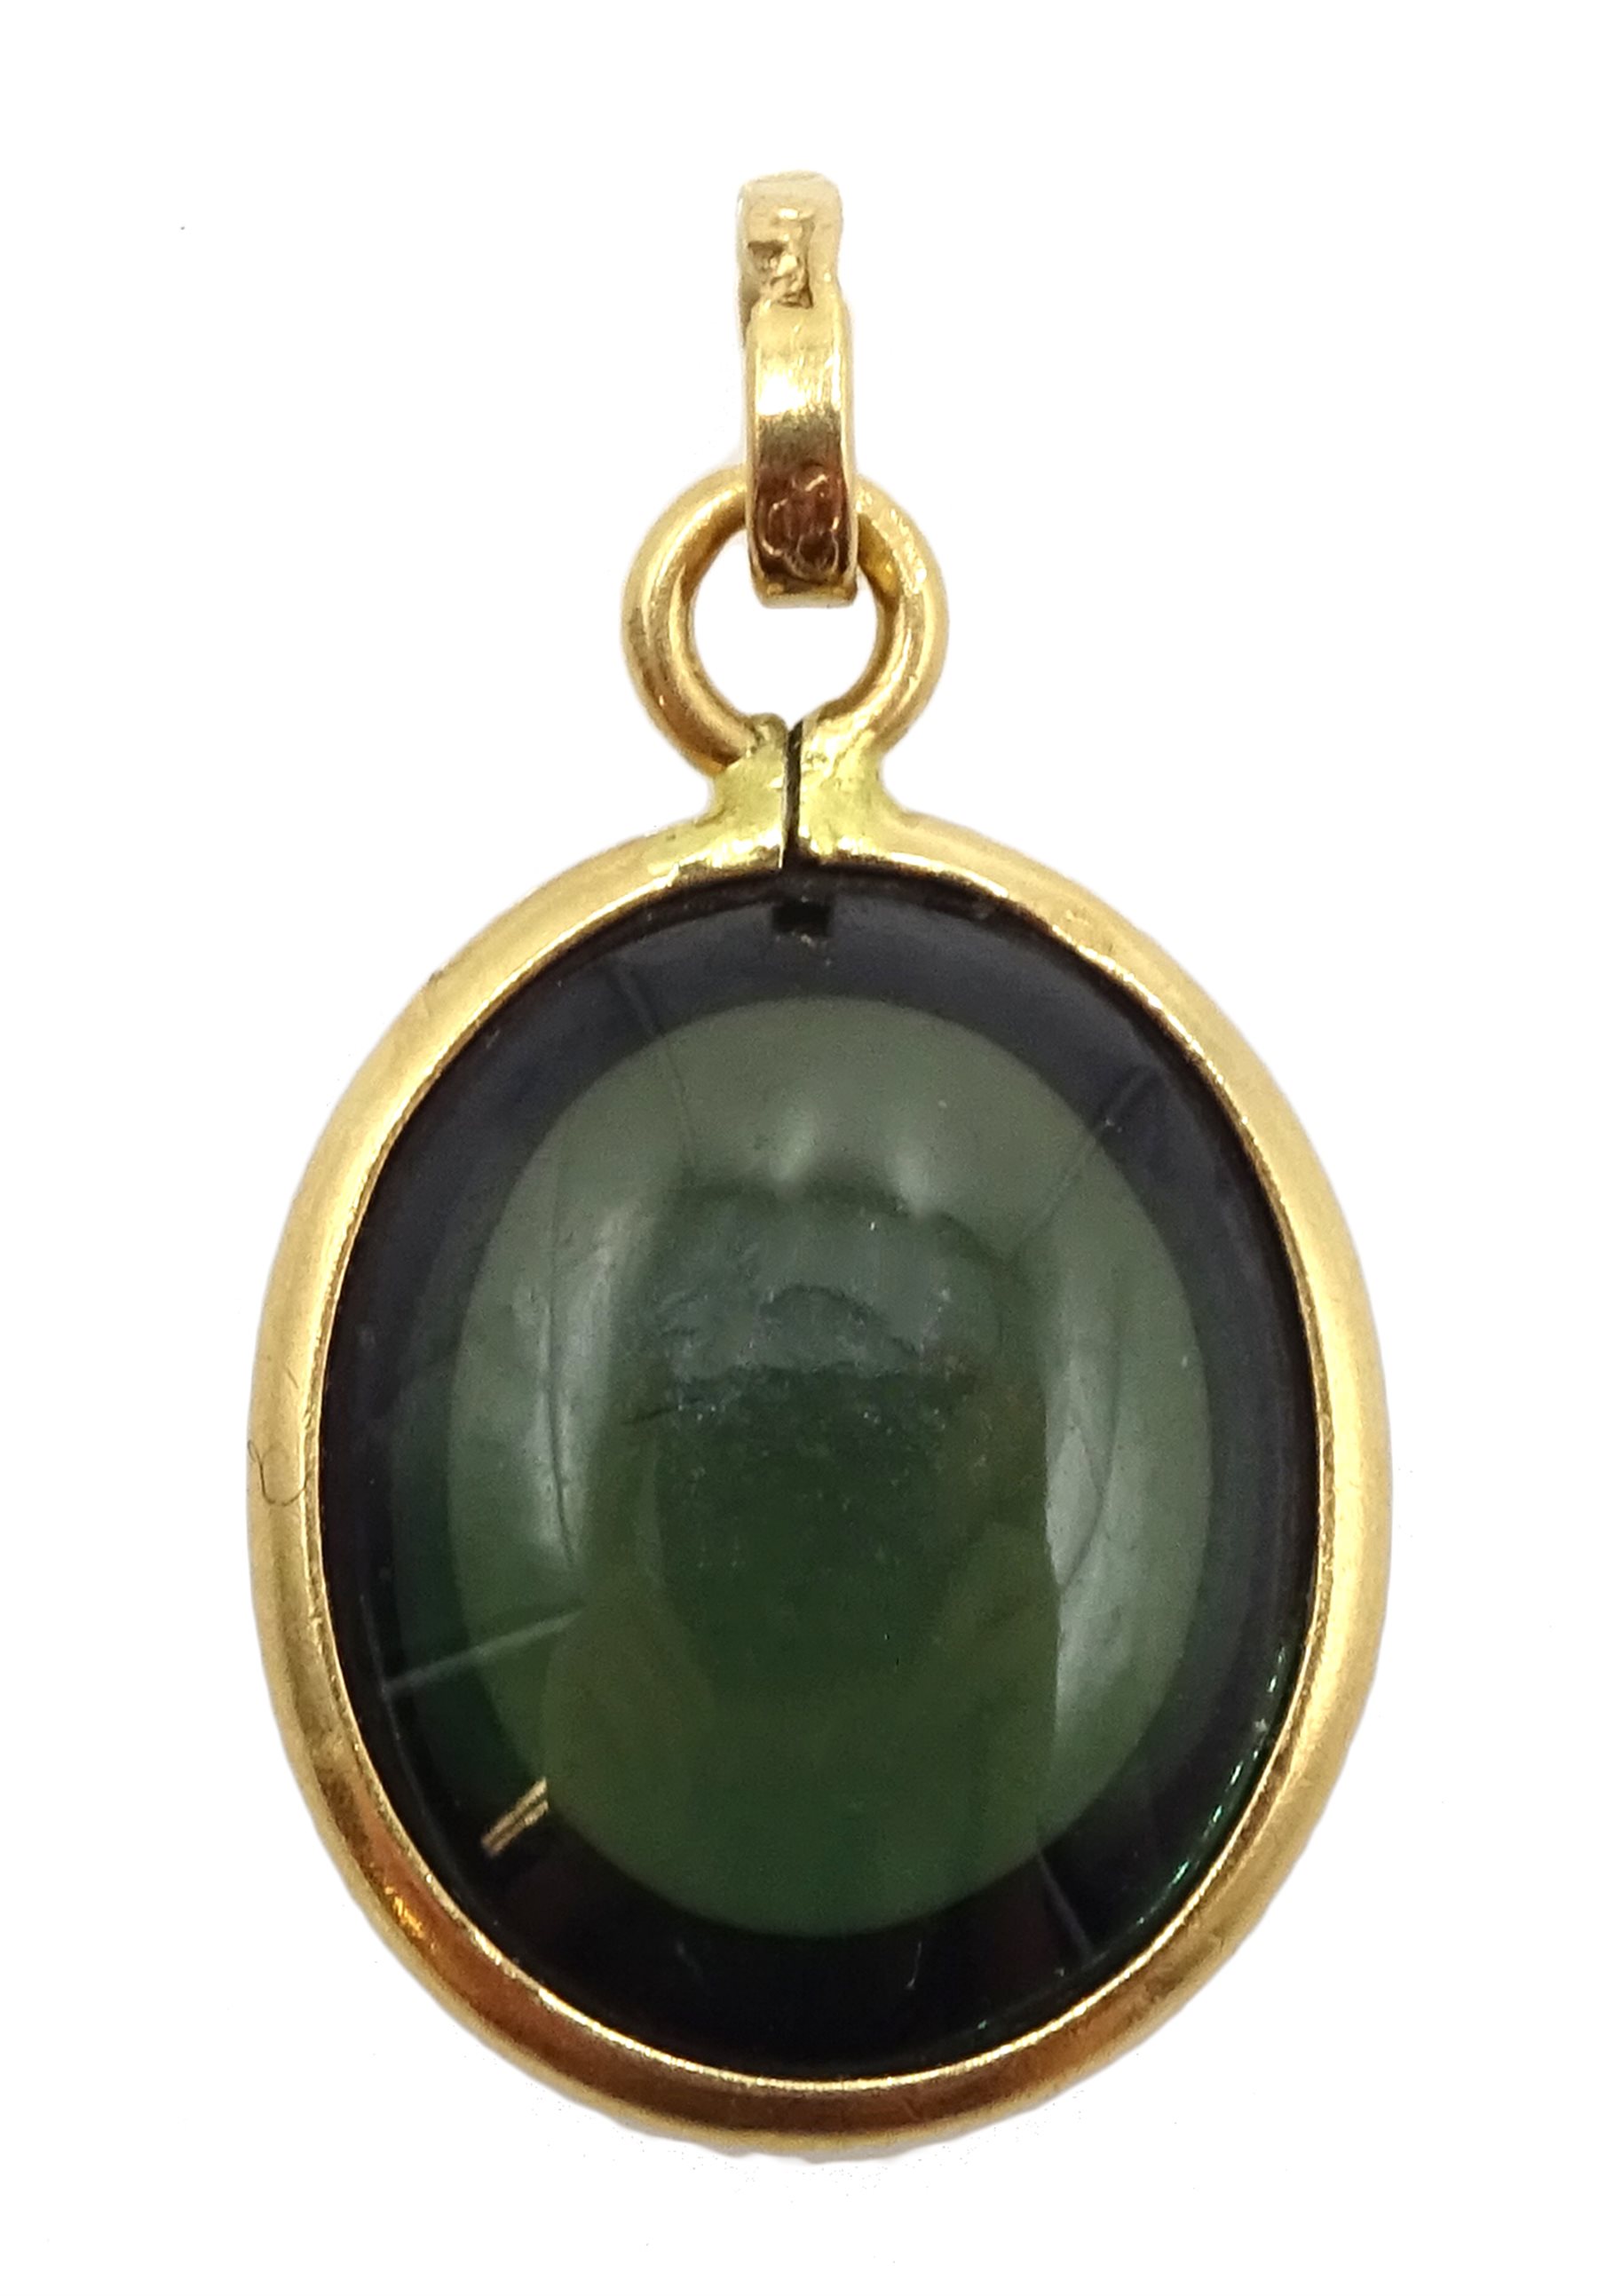 Gold mounted cabochon green tourmaline pendant, stamped 18K